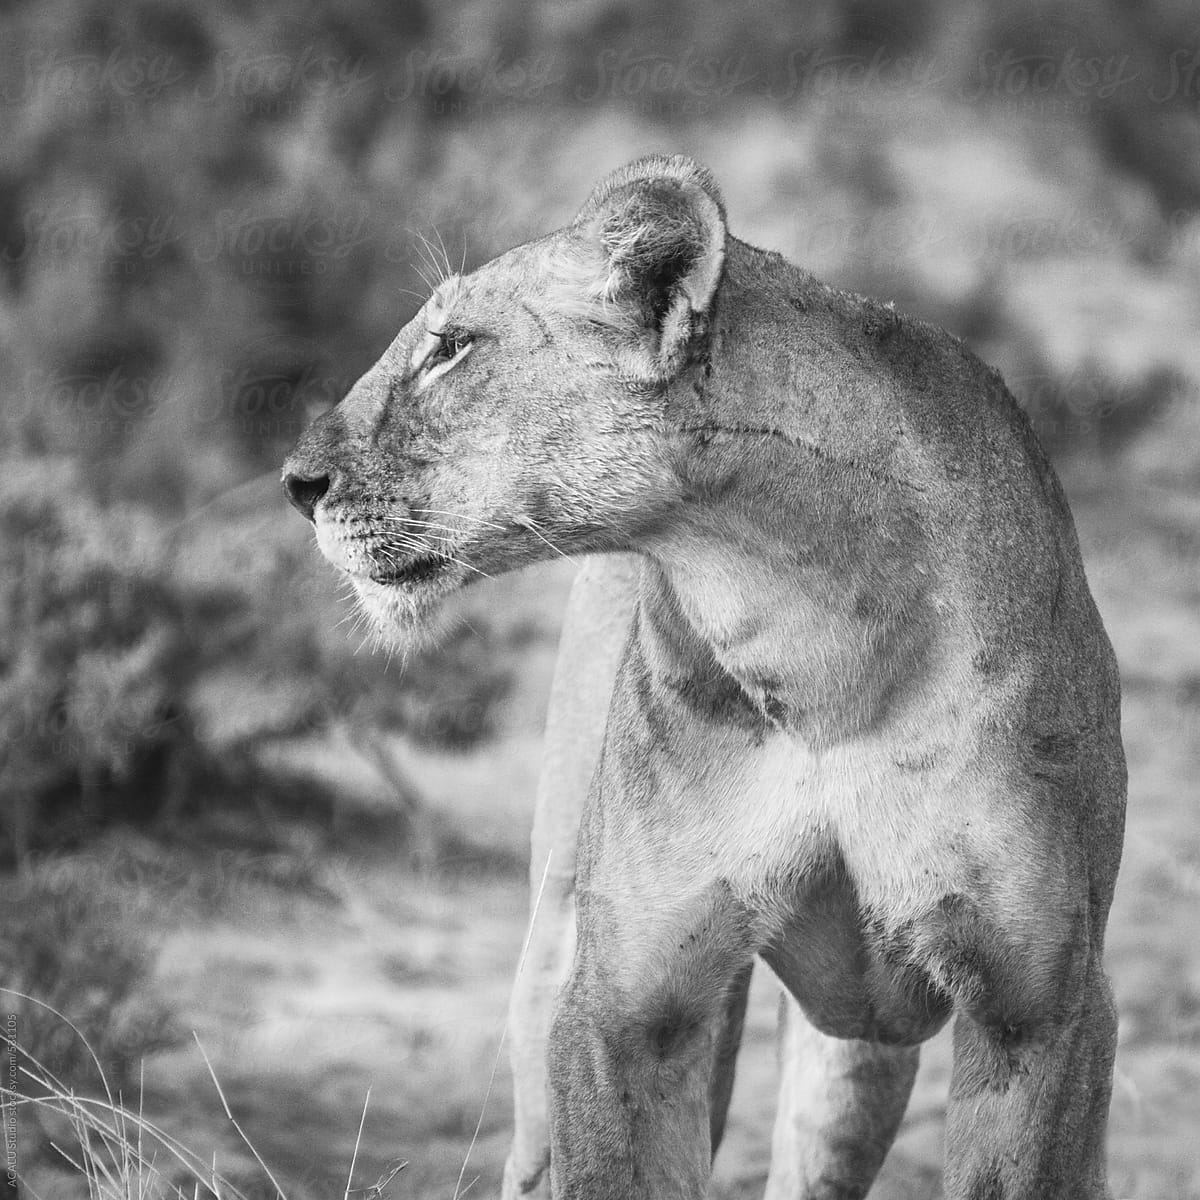 Lioness profile in black and white